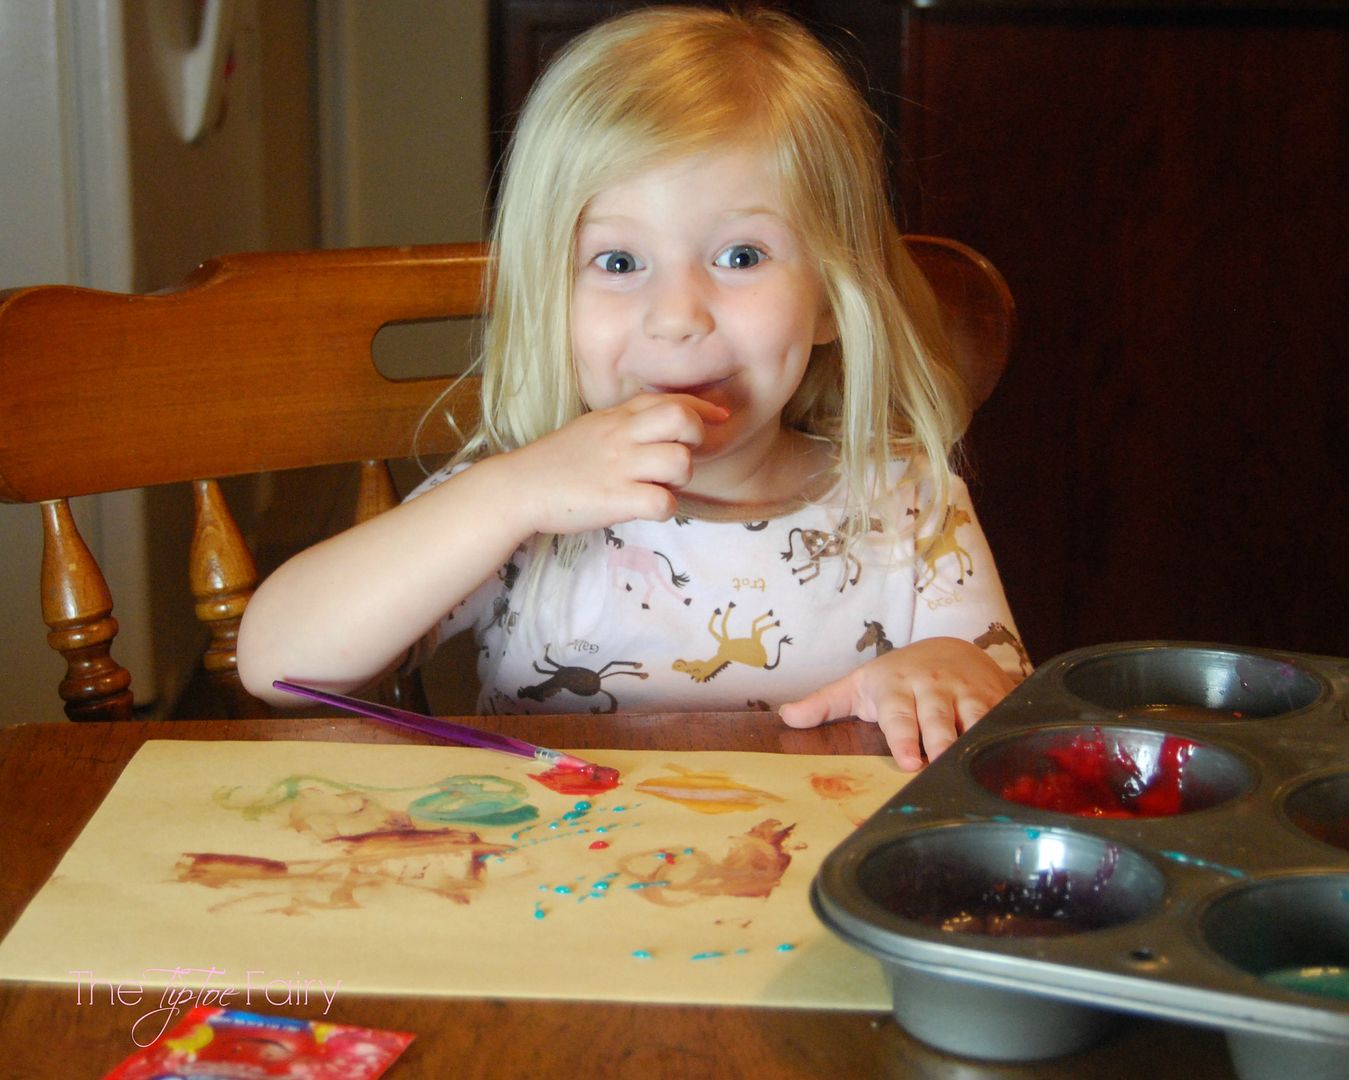 Easy Edible Paints | The TipToe Fairy #edible #crafts #paint #kidsactivities